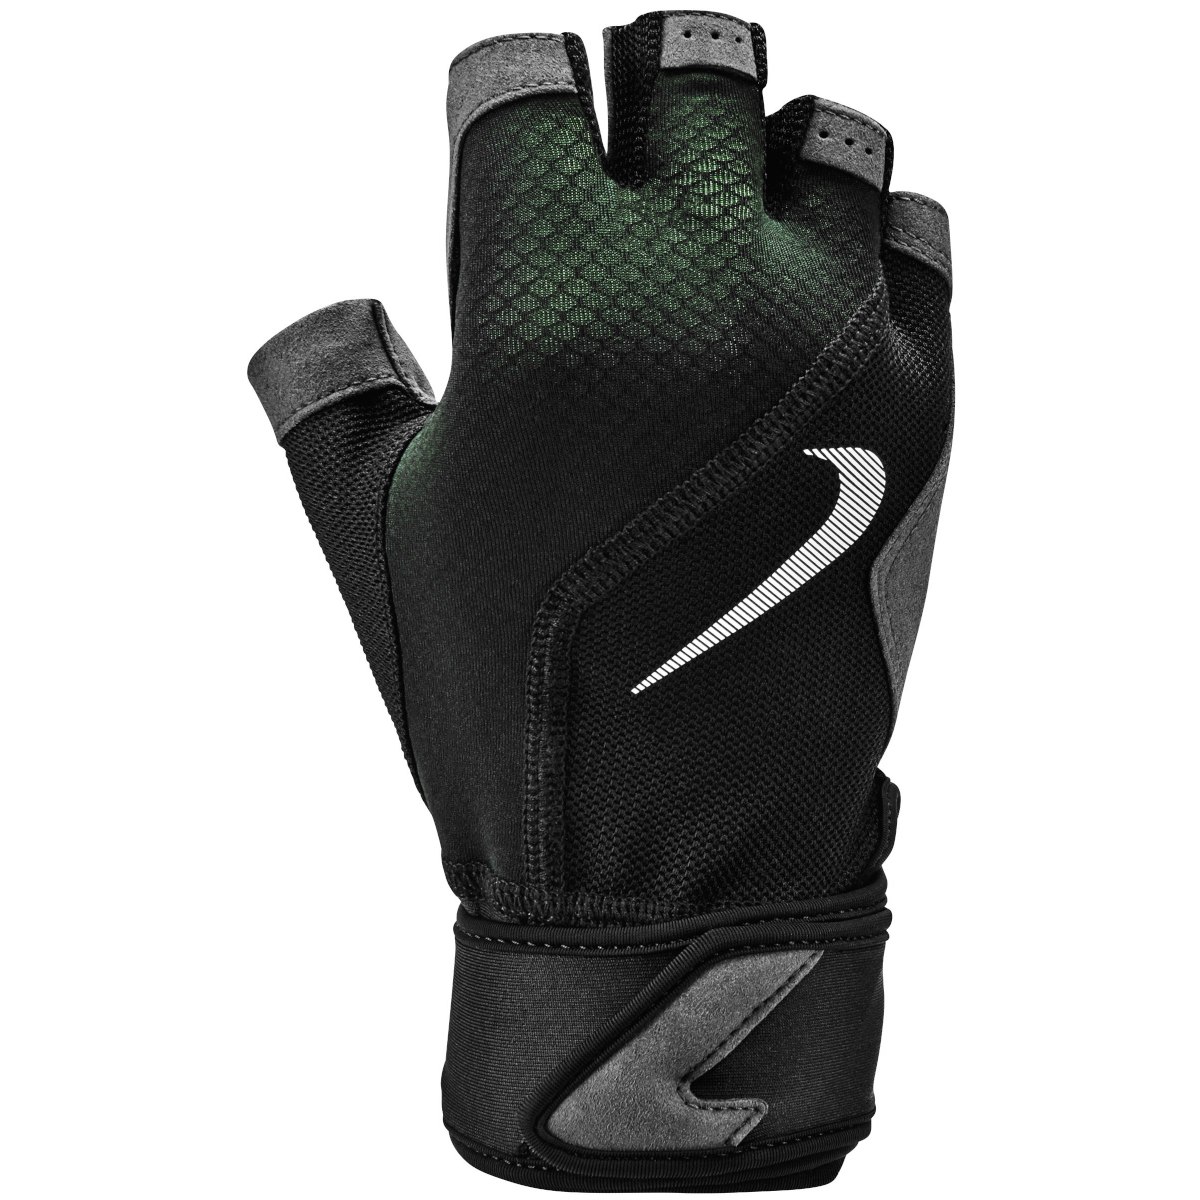 Bild von Nike Herren Premium Fitness-Handschuhe - black/volt/black/white 083